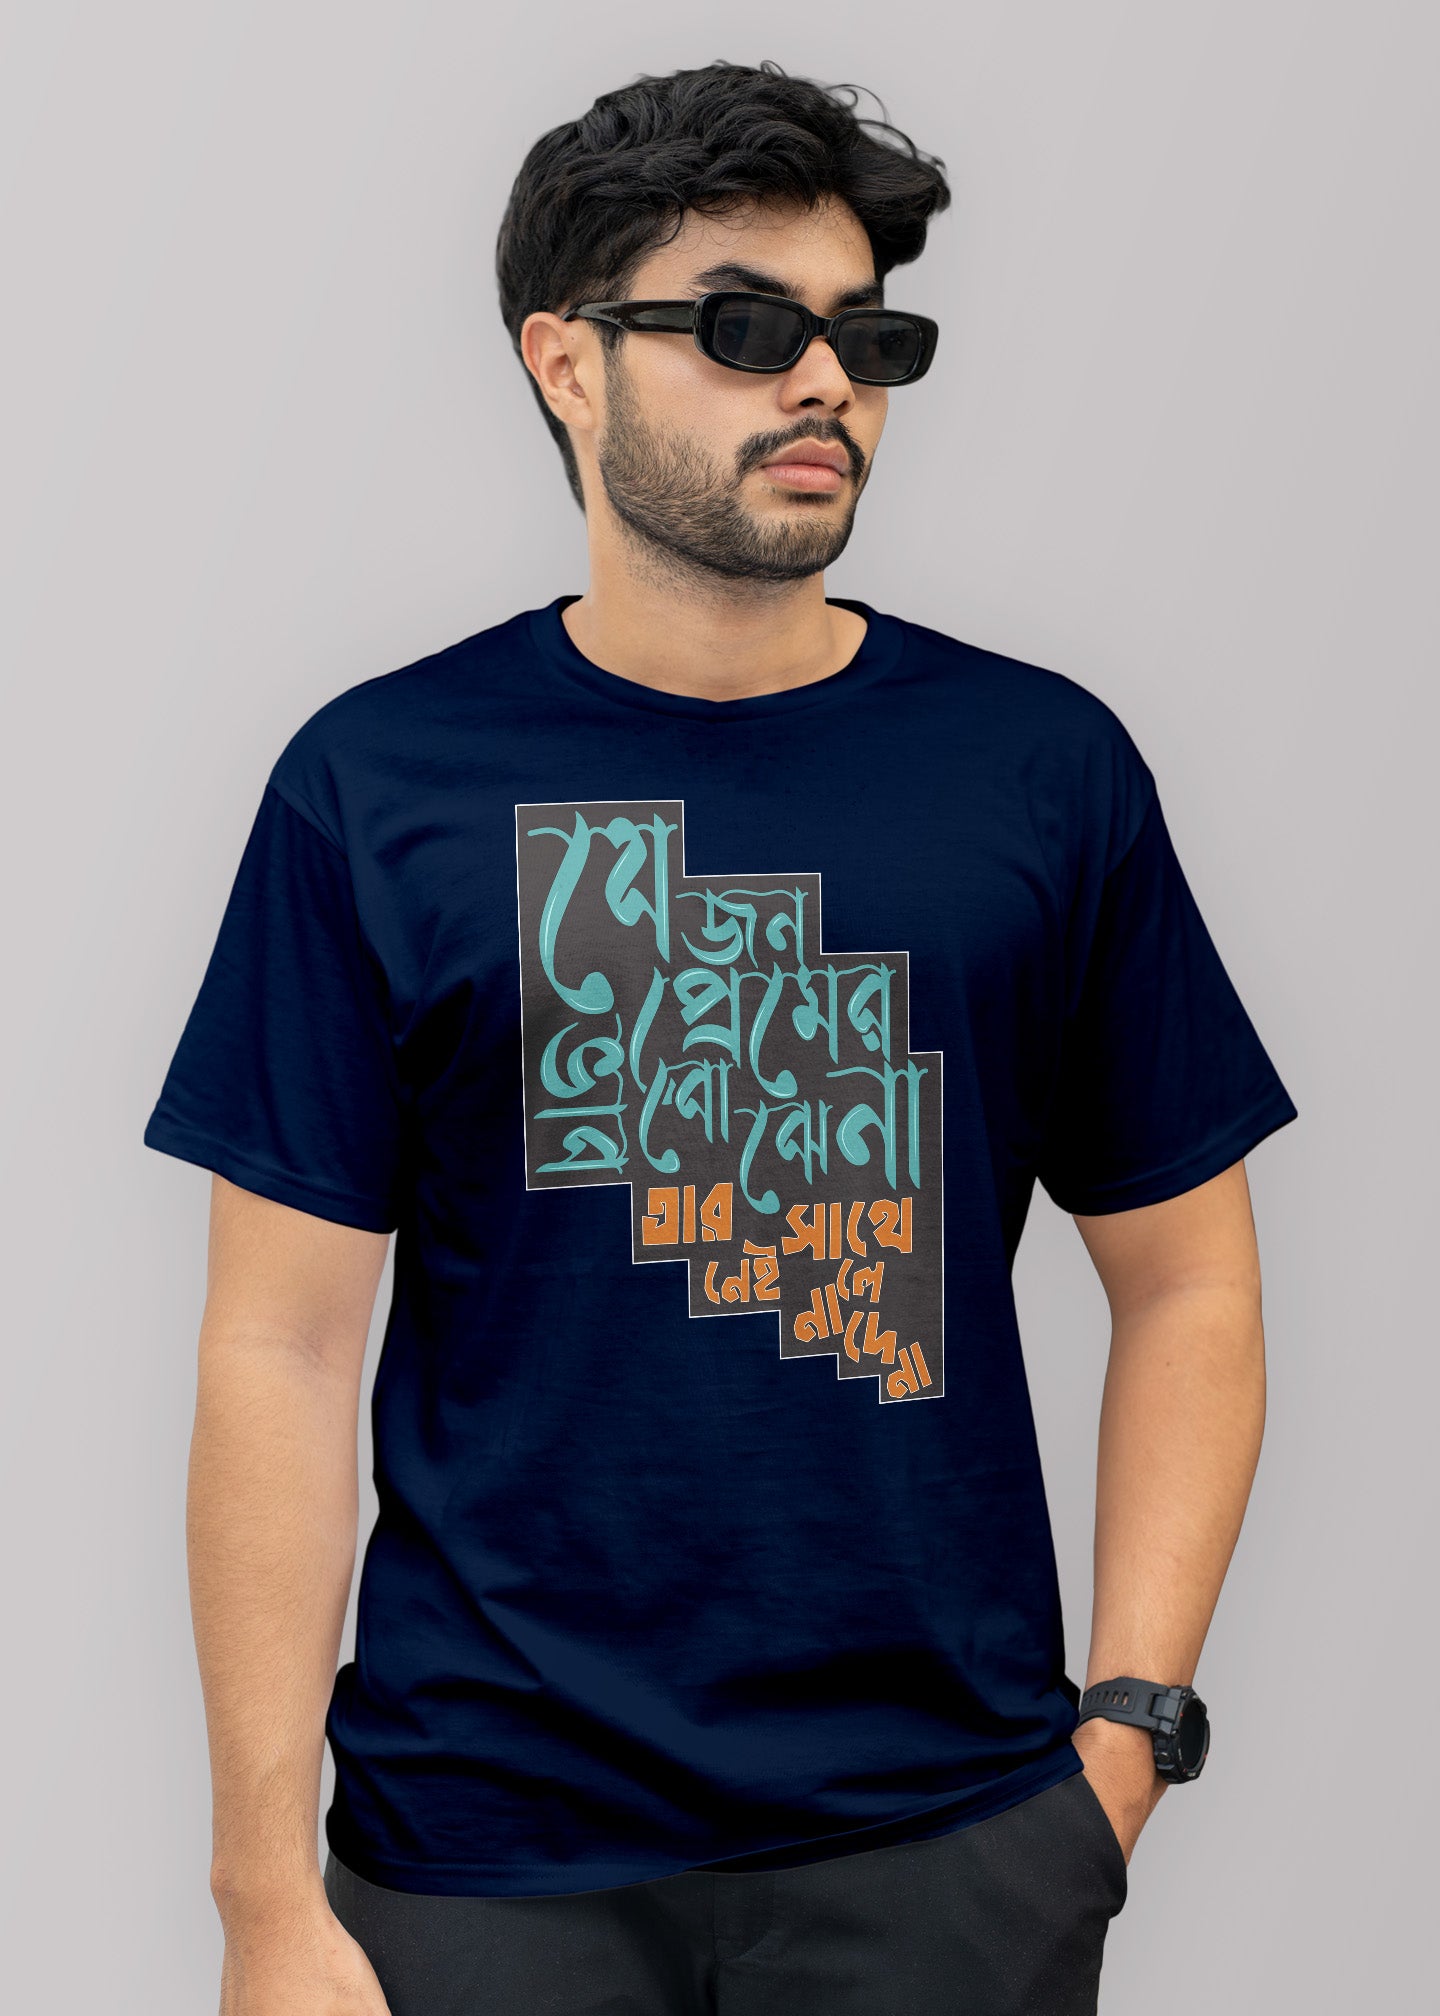 Je jon premer bhav bojhe nai bengali Printed Half Sleeve Premium Cotton T-shirt For Men